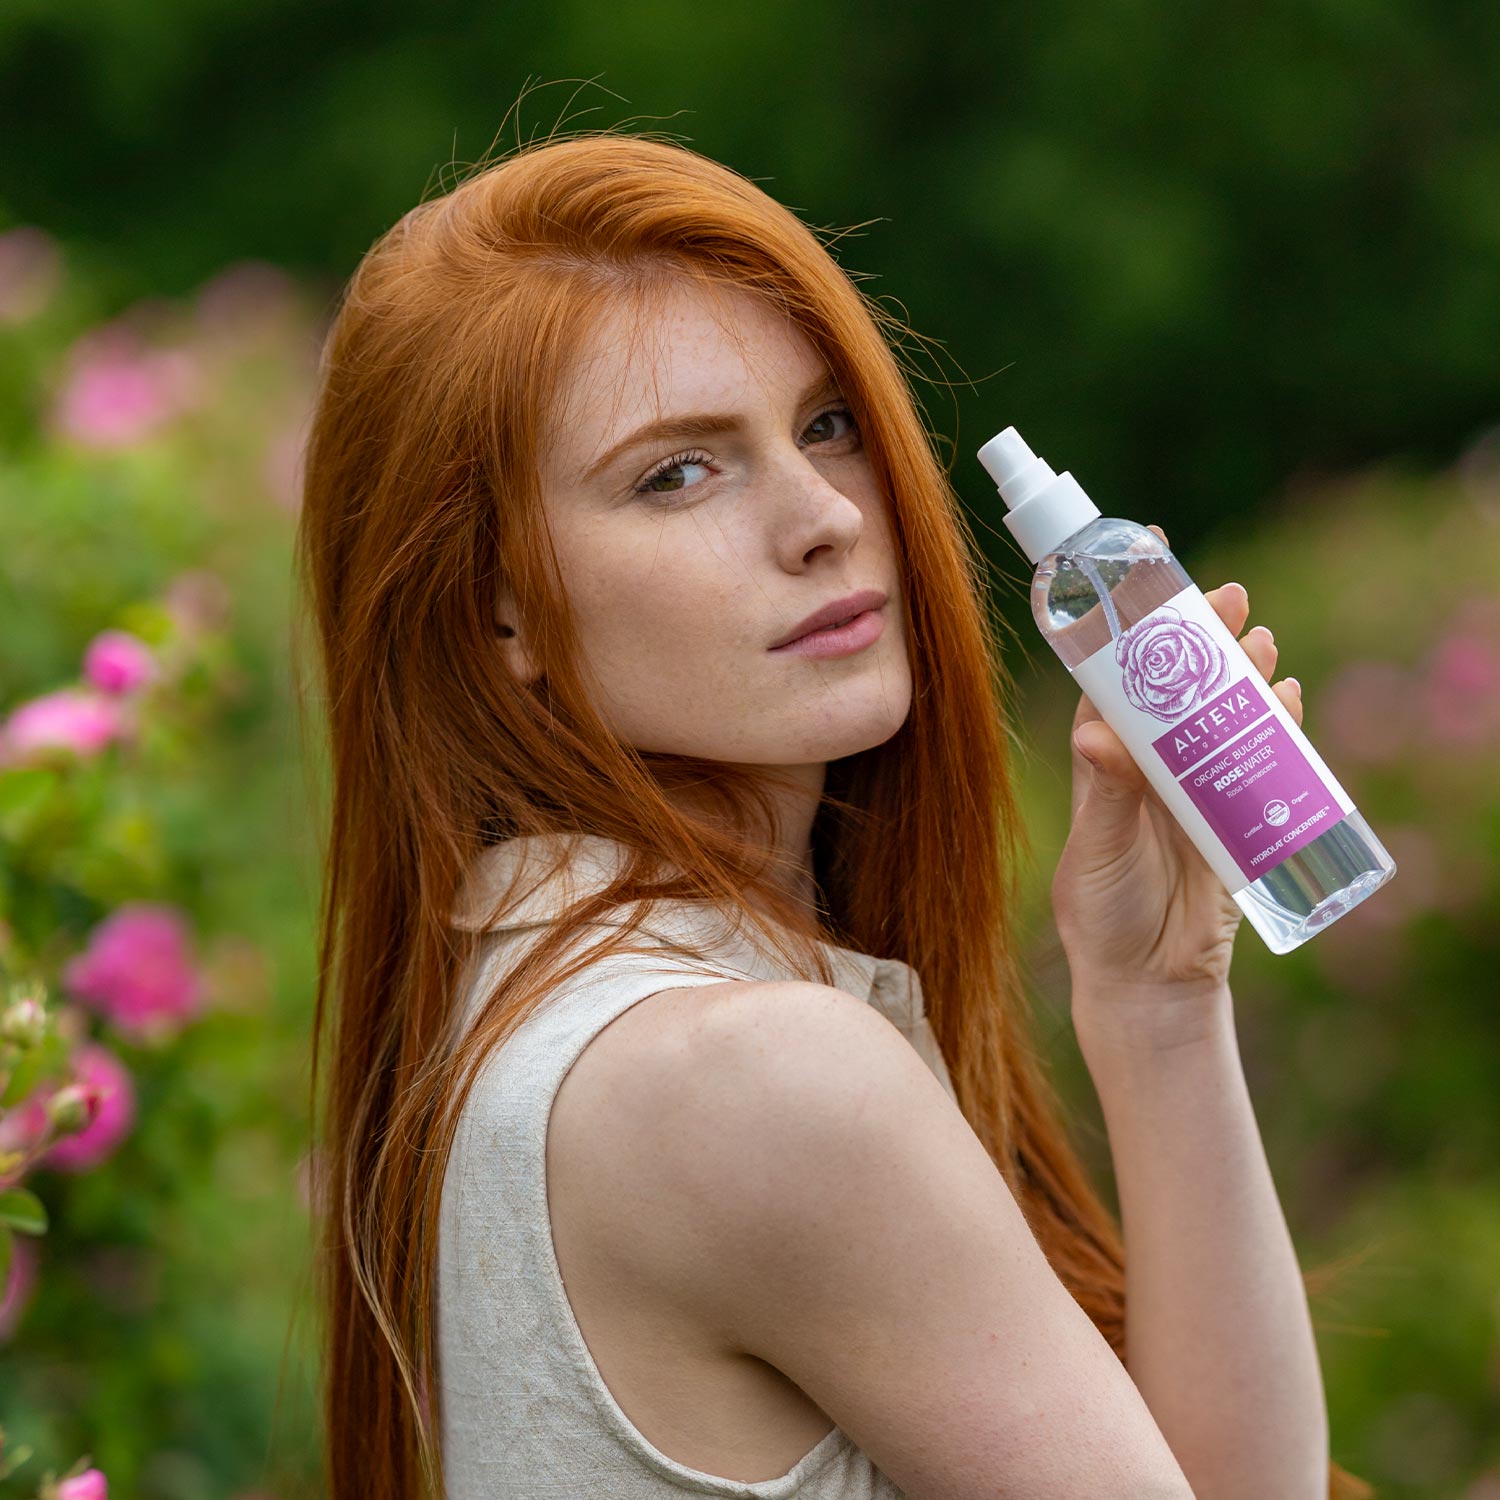 A woman with vibrant red hair holding a bottle of Alteya Organics' Organic Bulgarian Rose Water Toner Mist - 8.5 Fl Oz spray.